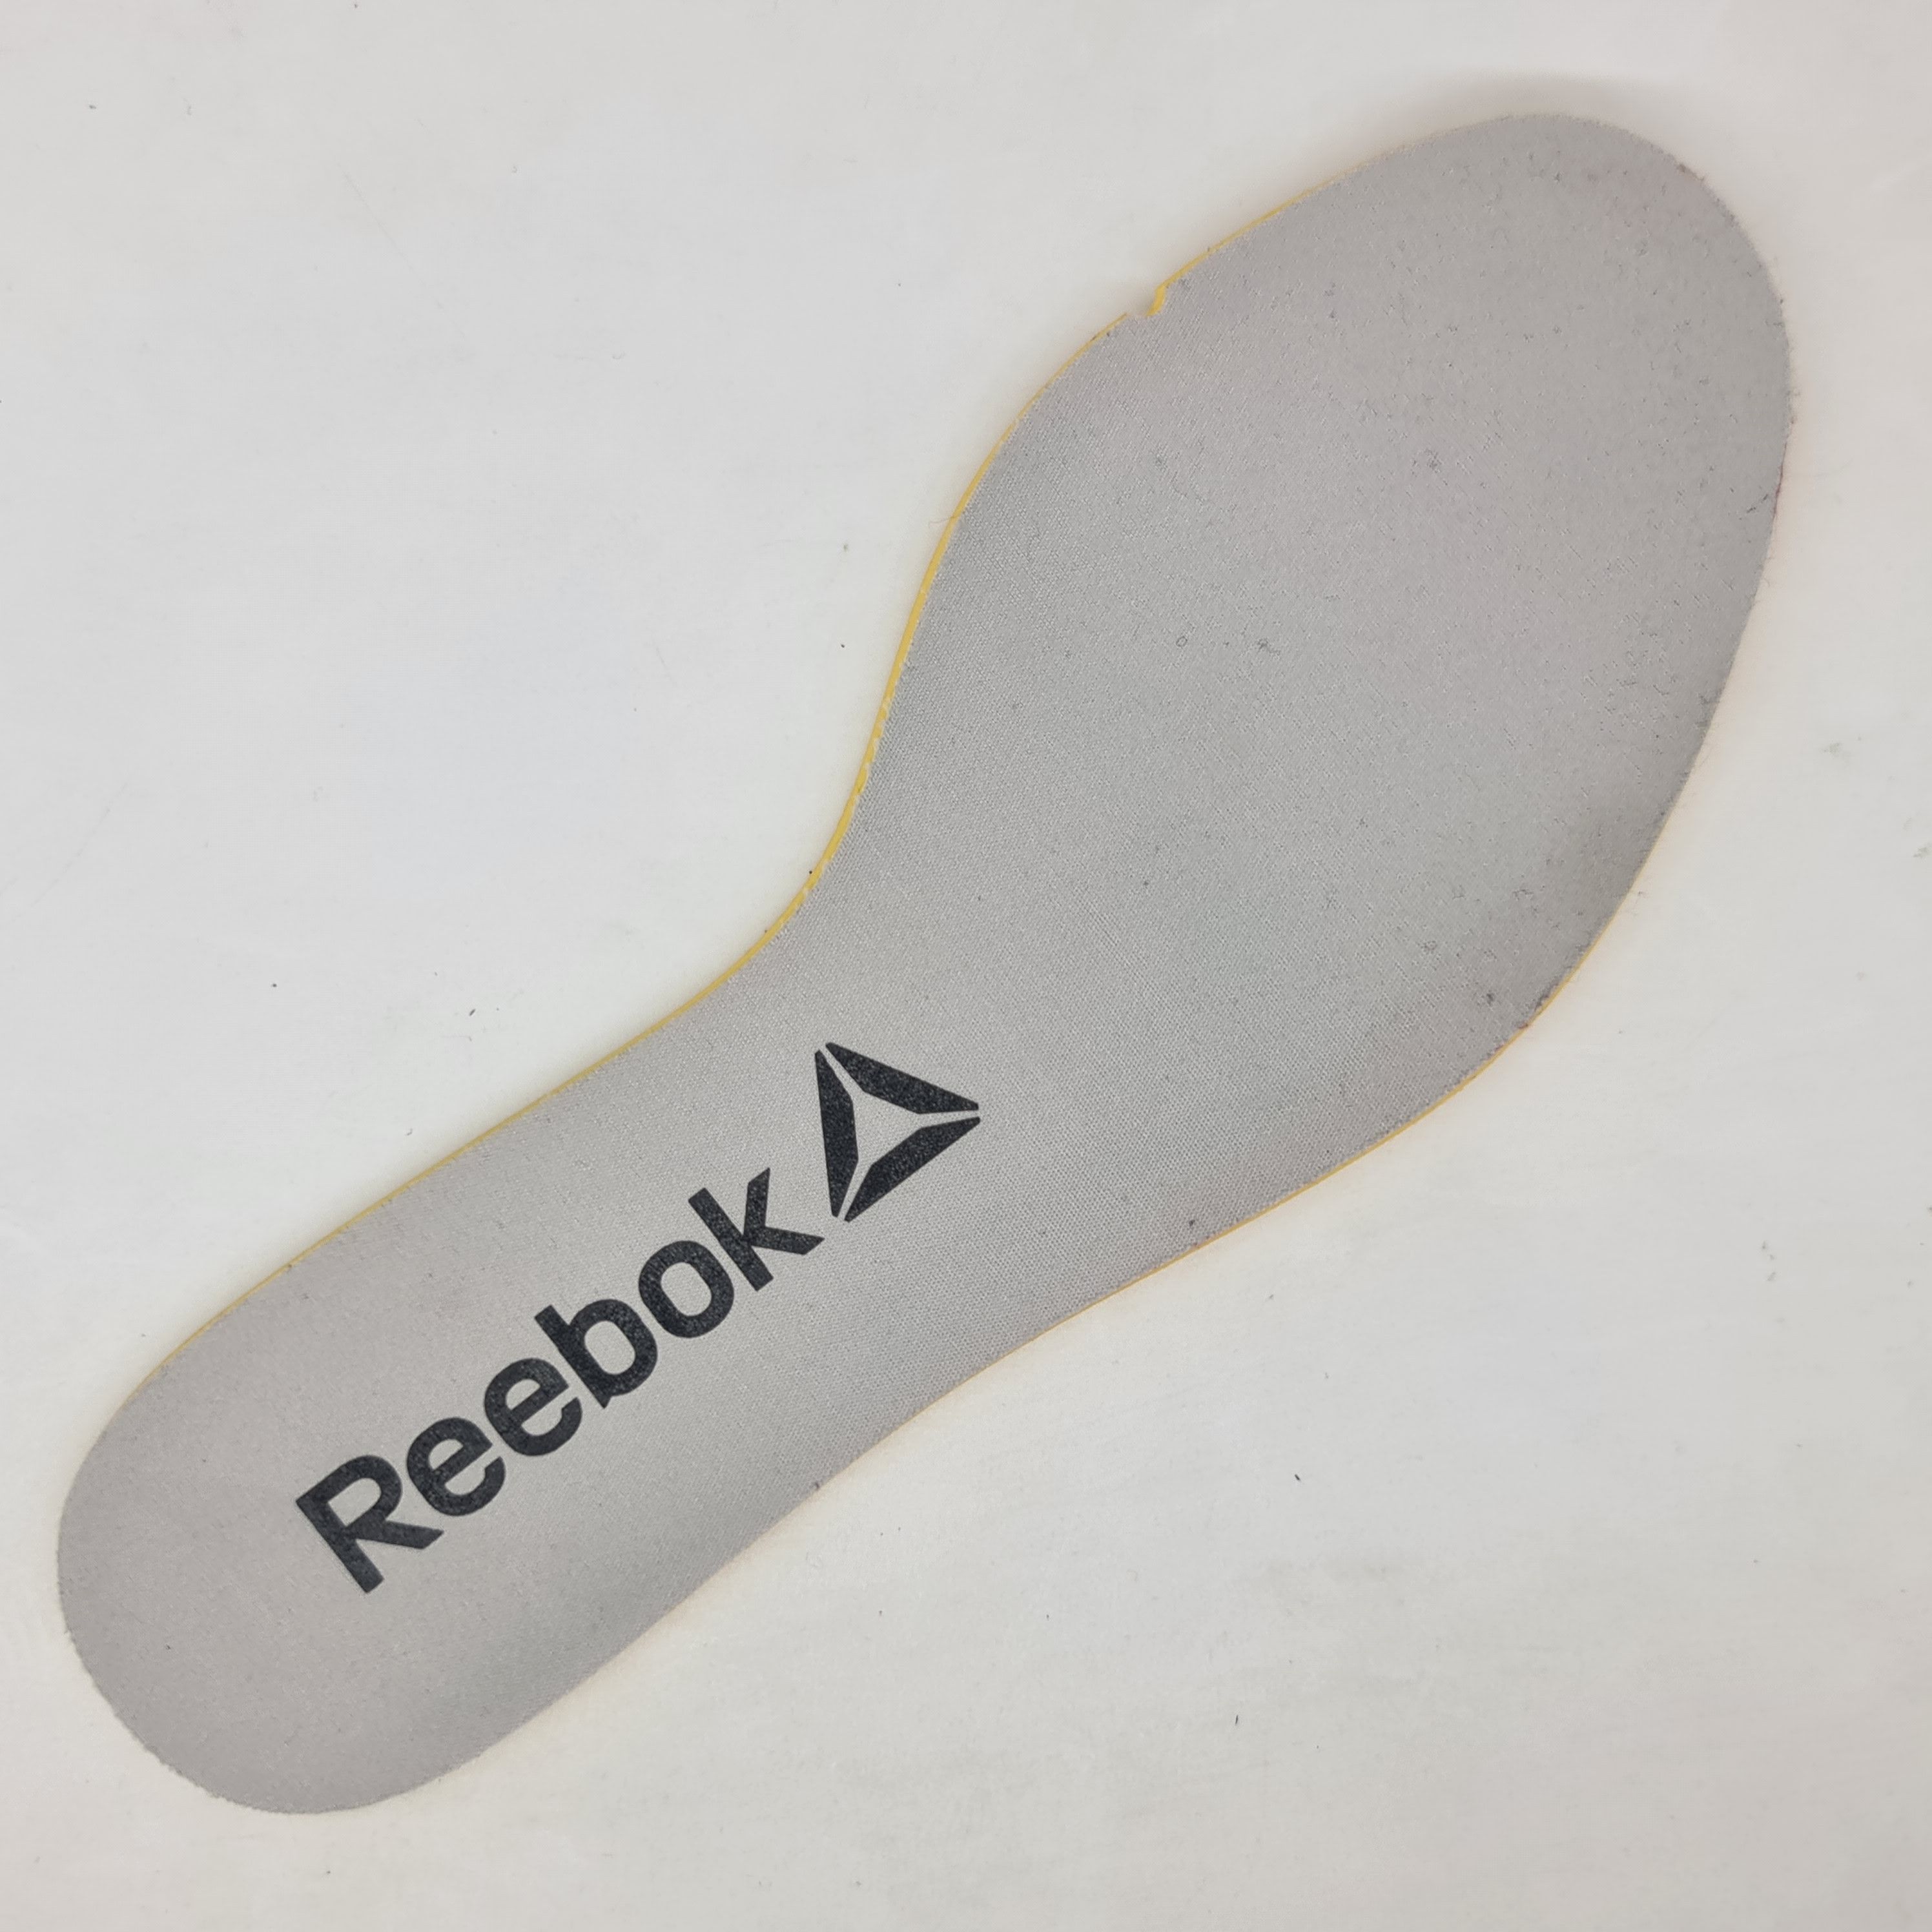 Vetements x Reebok - Size 36 Gray Sock Runner - 9